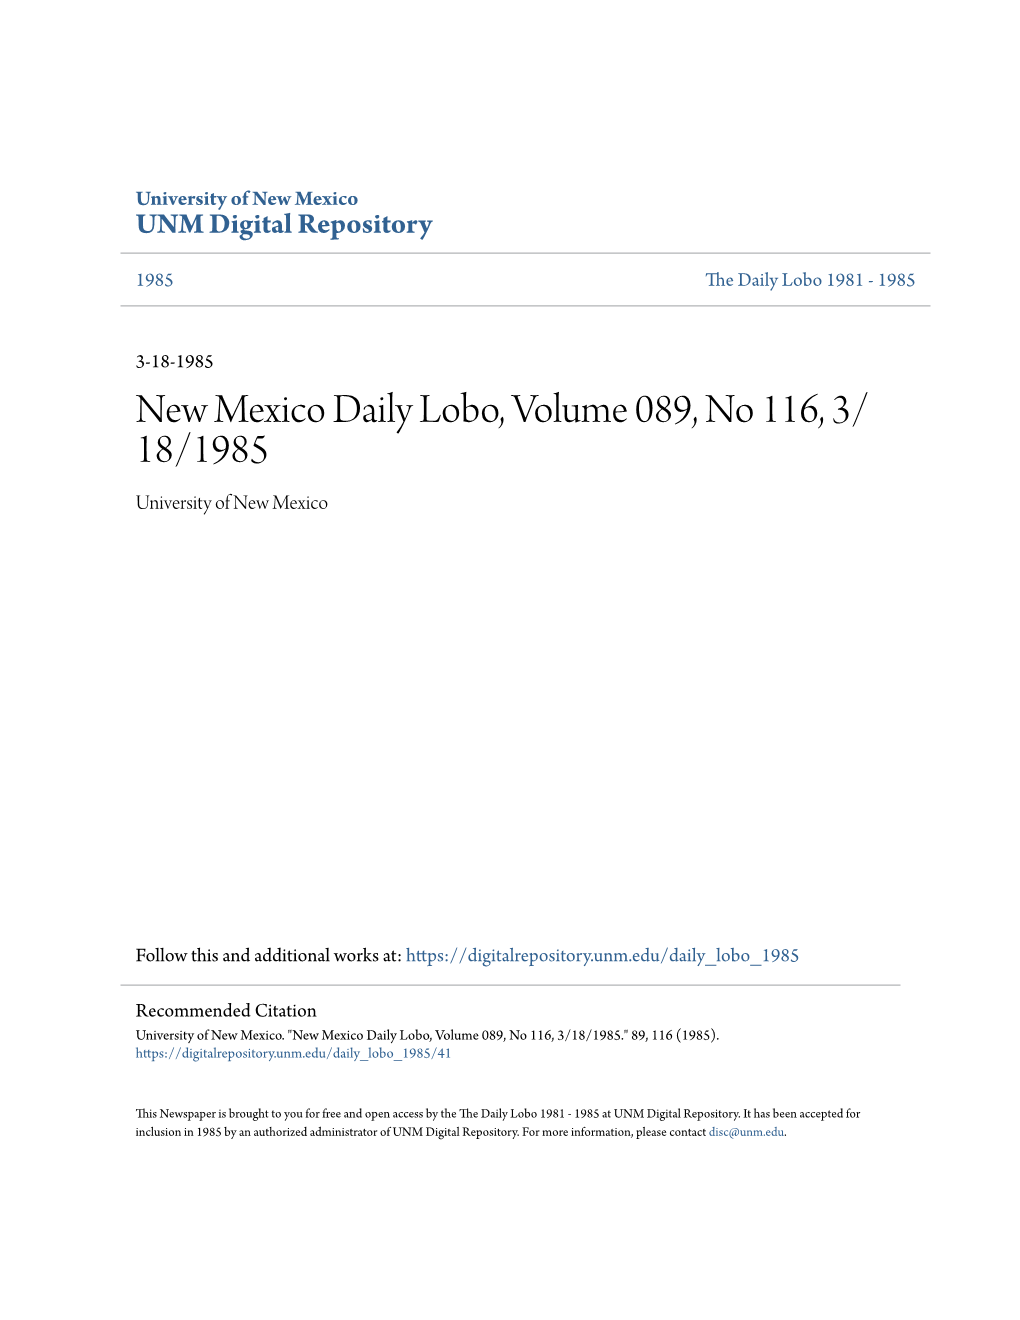 New Mexico Daily Lobo, Volume 089, No 116, 3/18/1985." 89, 116 (1985)